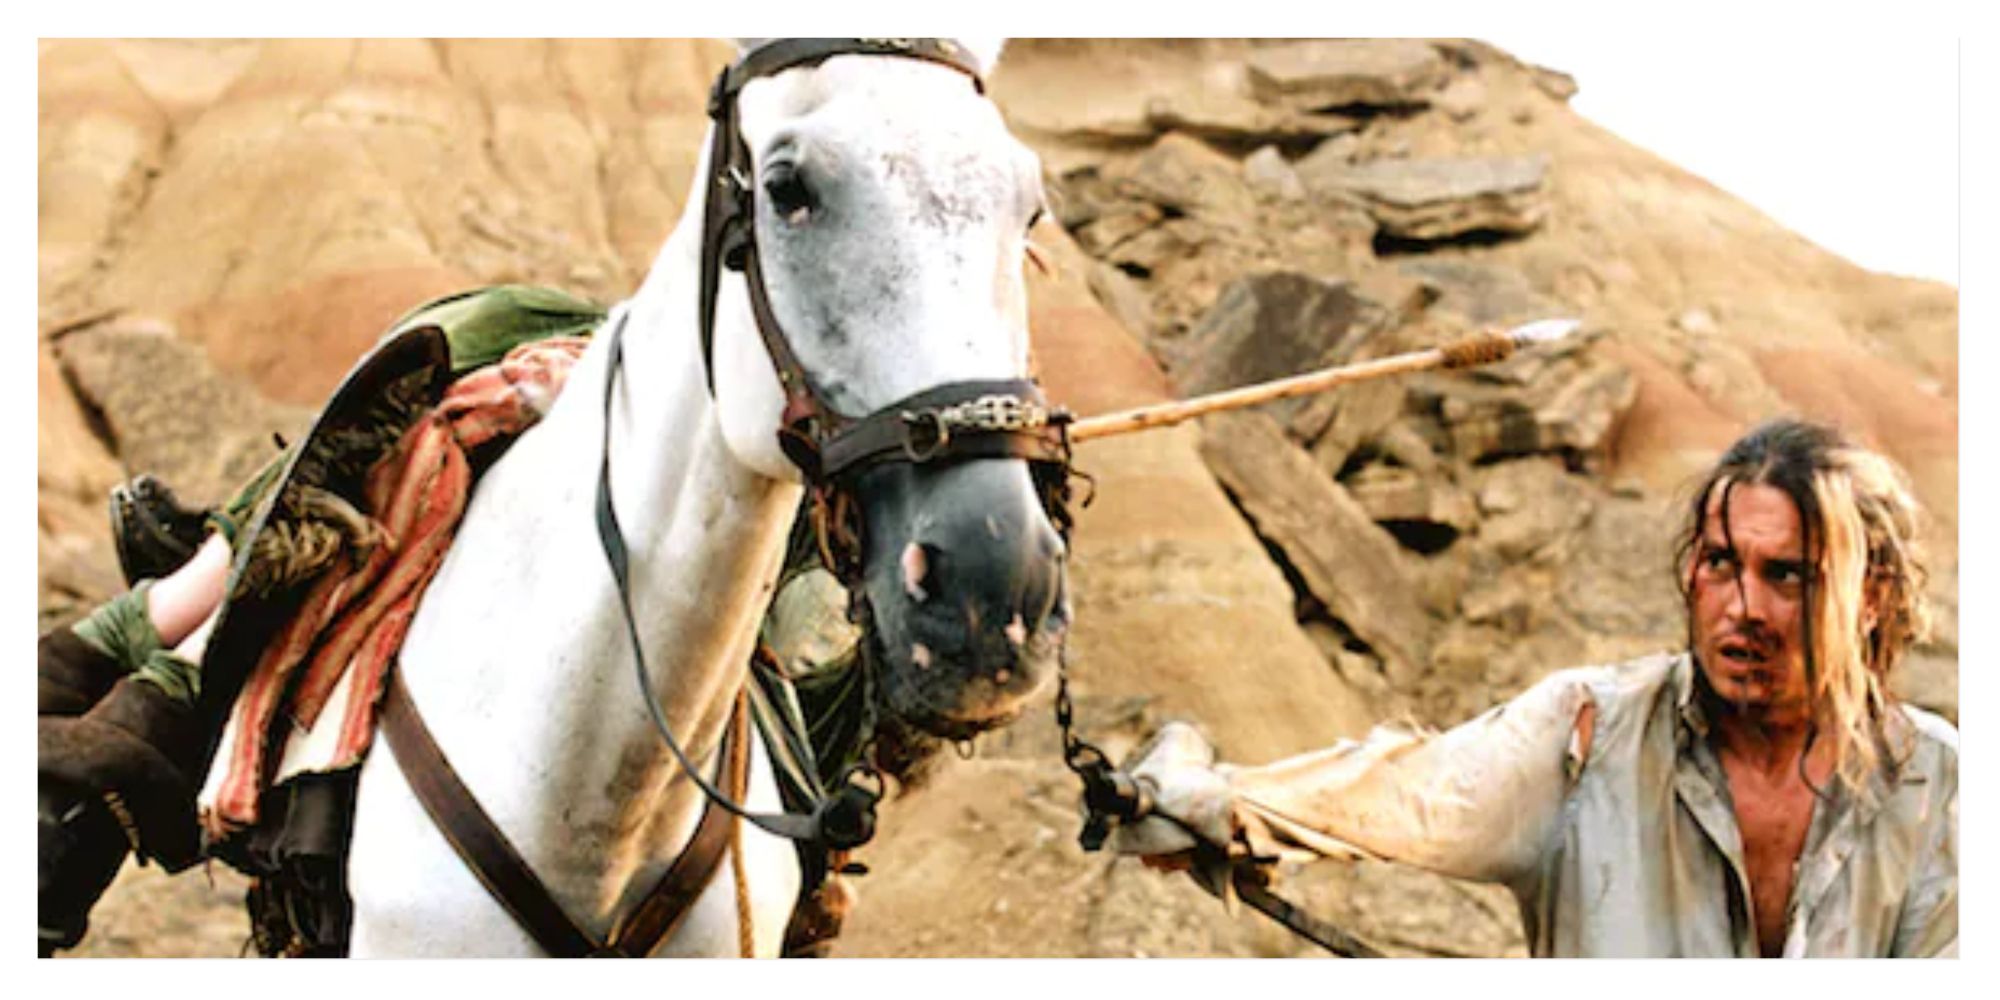 Johnny Depp wrangling a horse in Lost in La Mancha